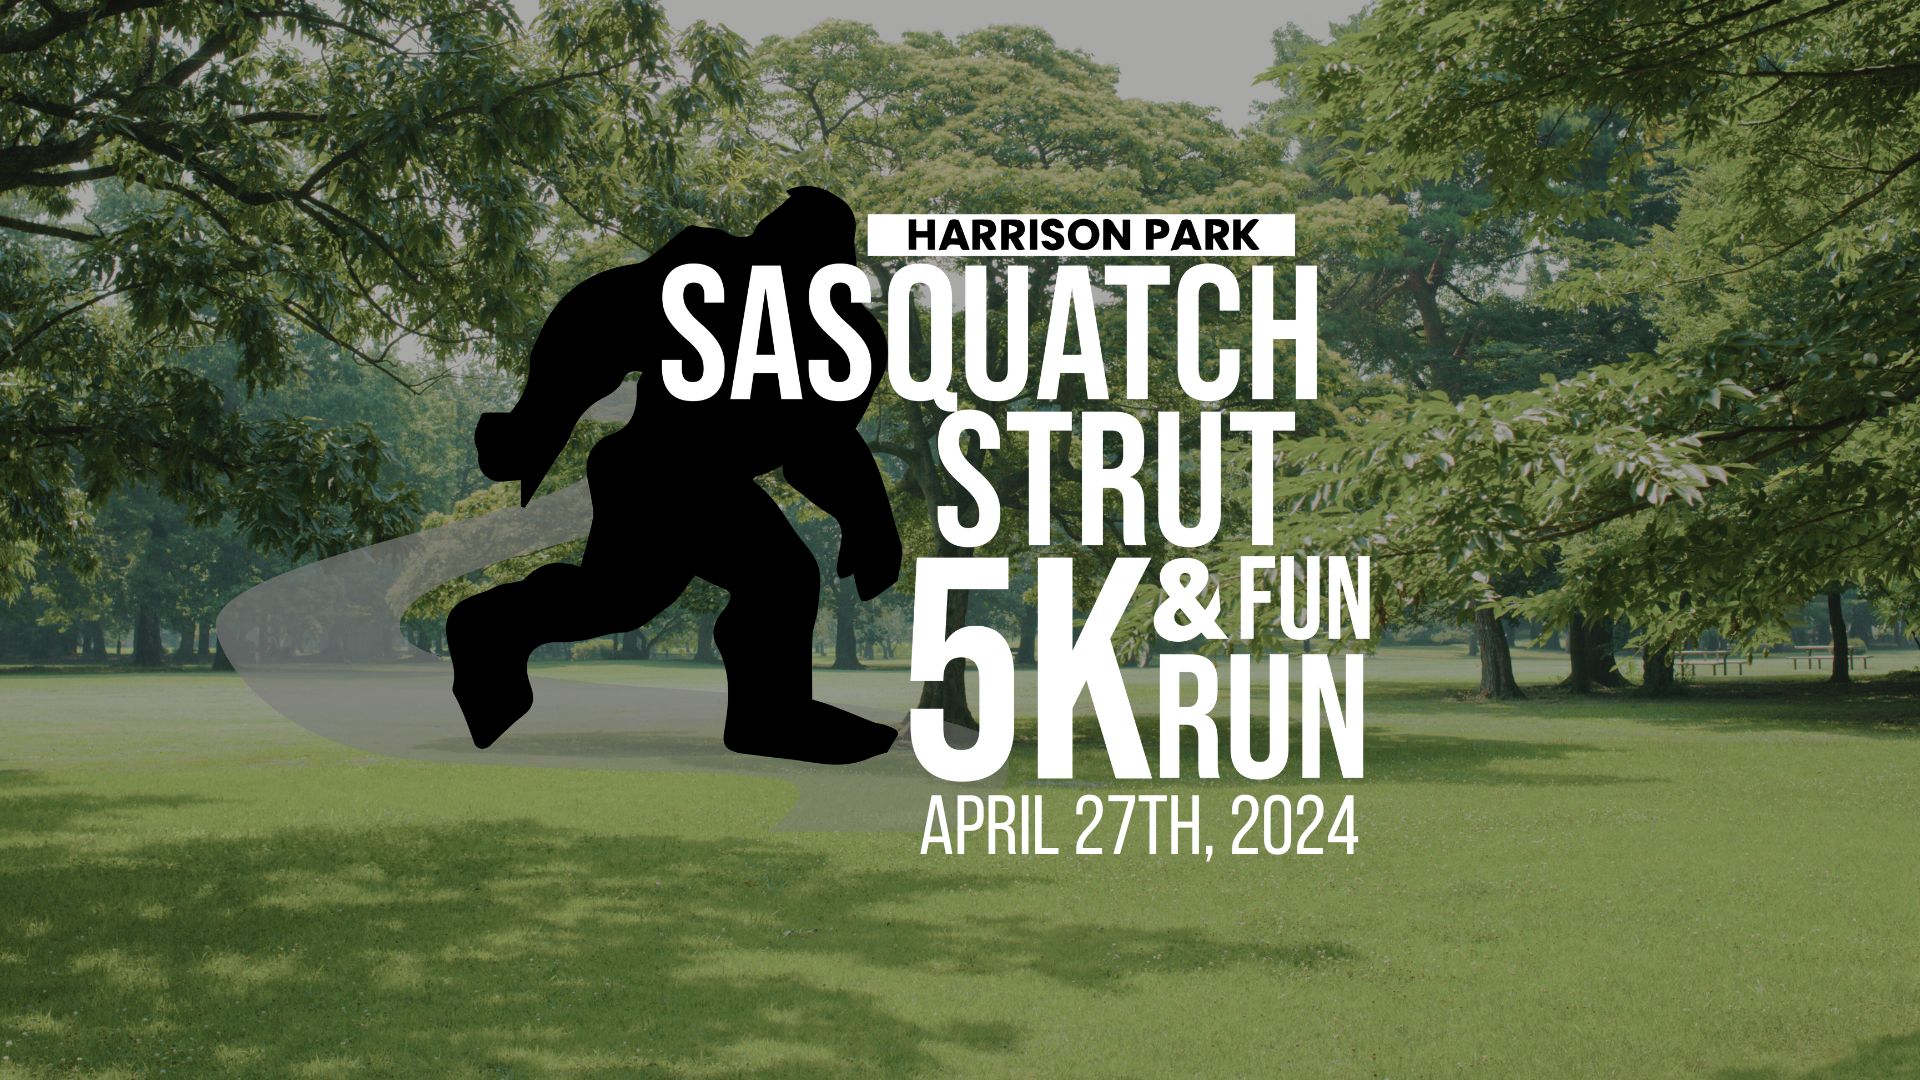 Sasquatch Strut @ Harrison Park